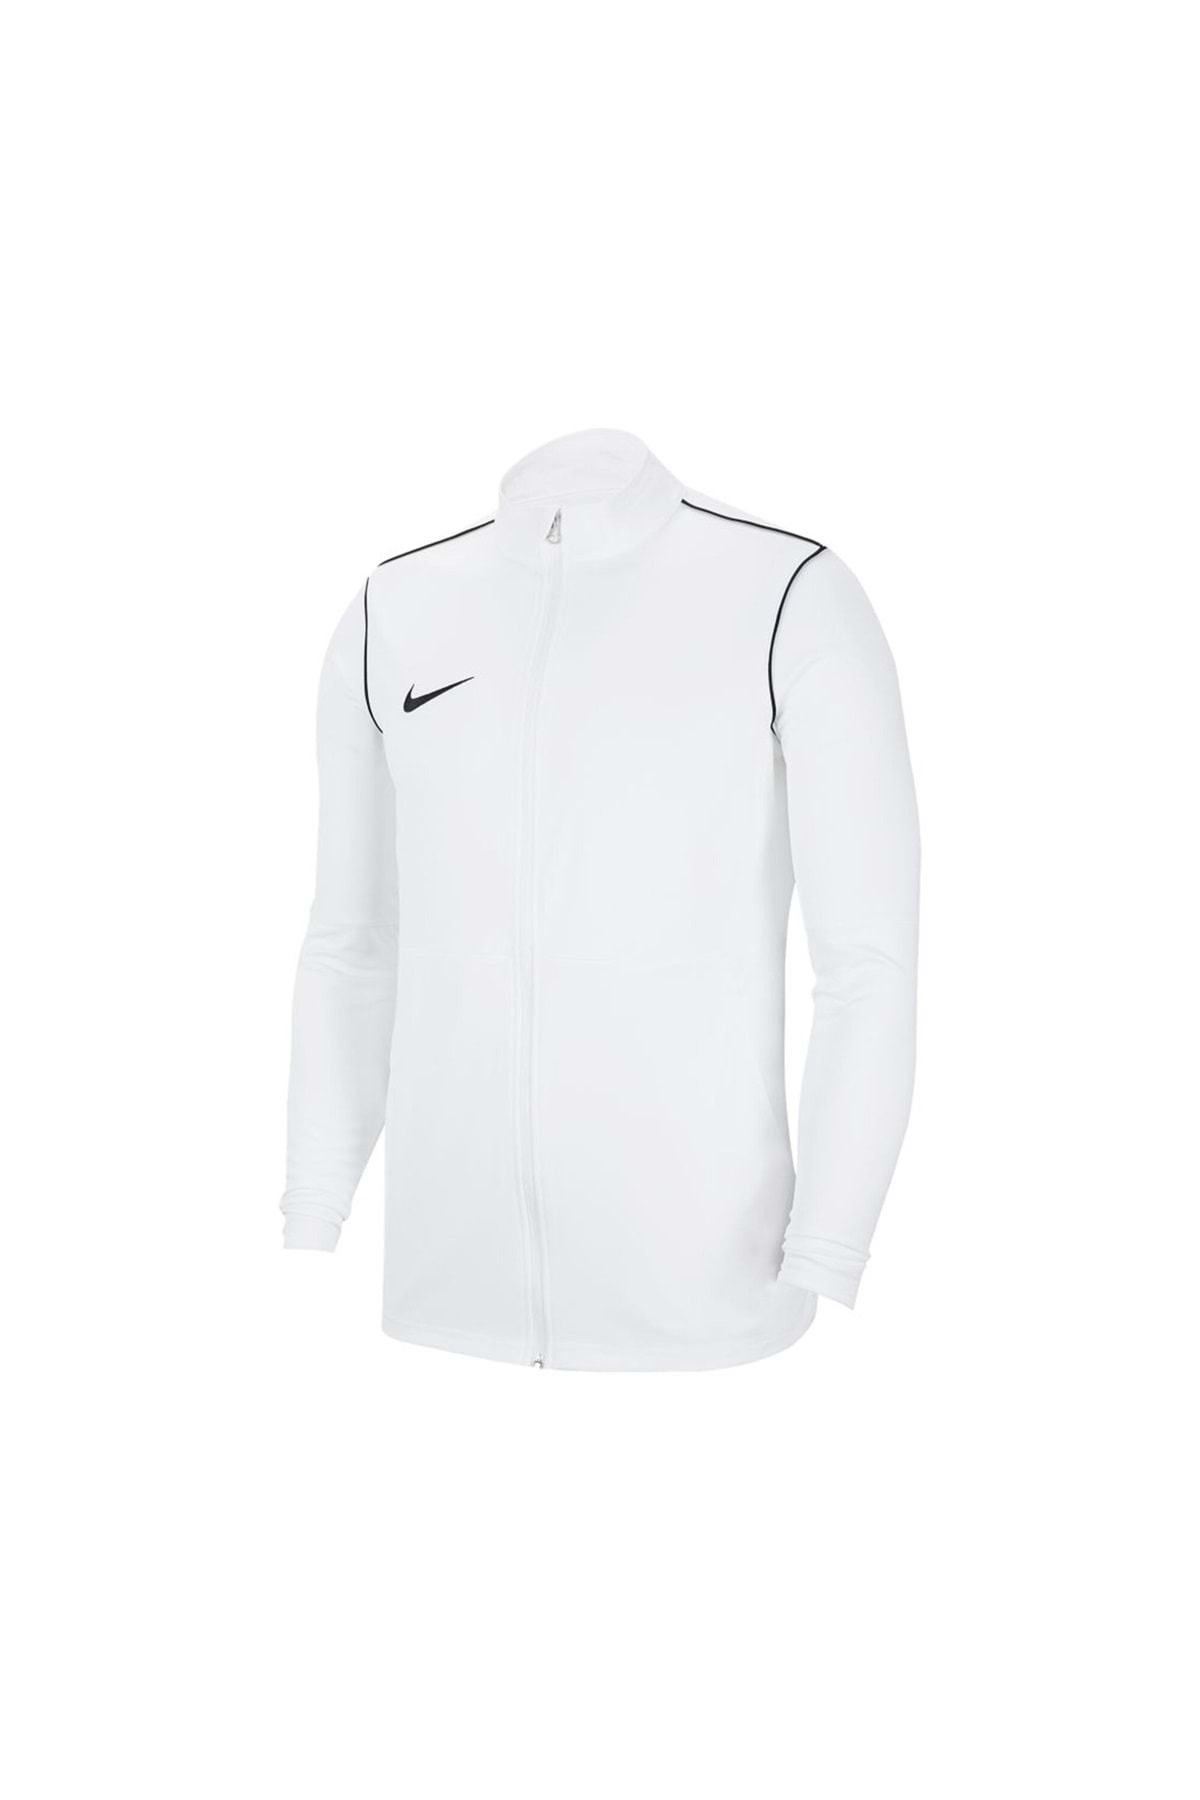 Nike Bv6885-100 Dri-fit Park 20 Knit Track Jacket Erkek Ceket Beyaz